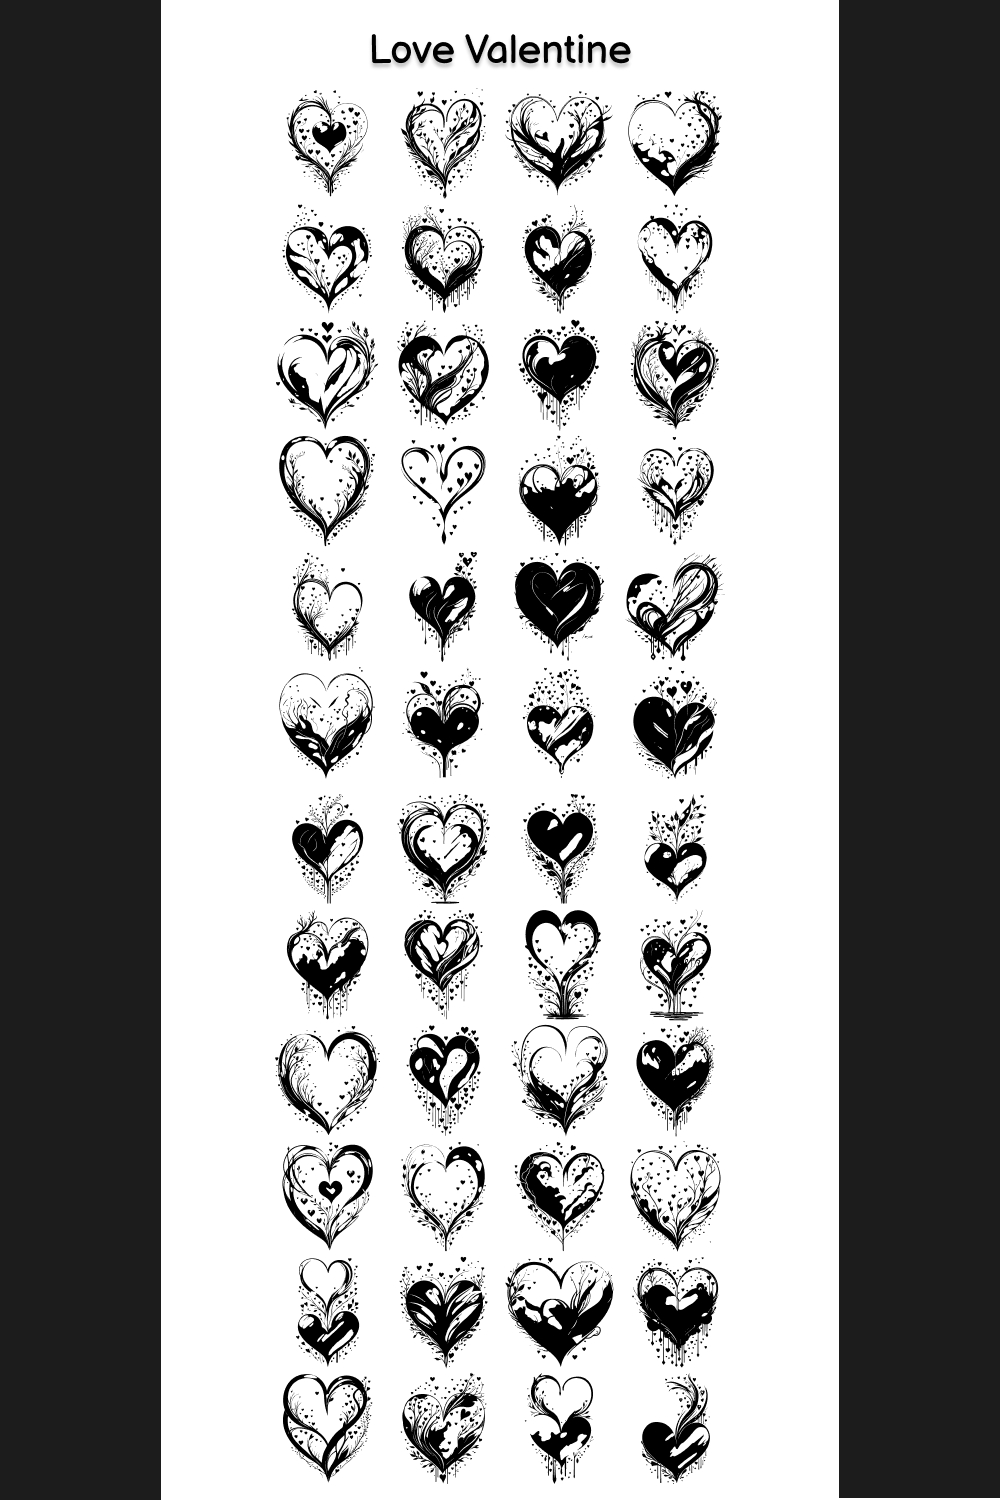 Love Valentine Element Draw Black pinterest preview image.